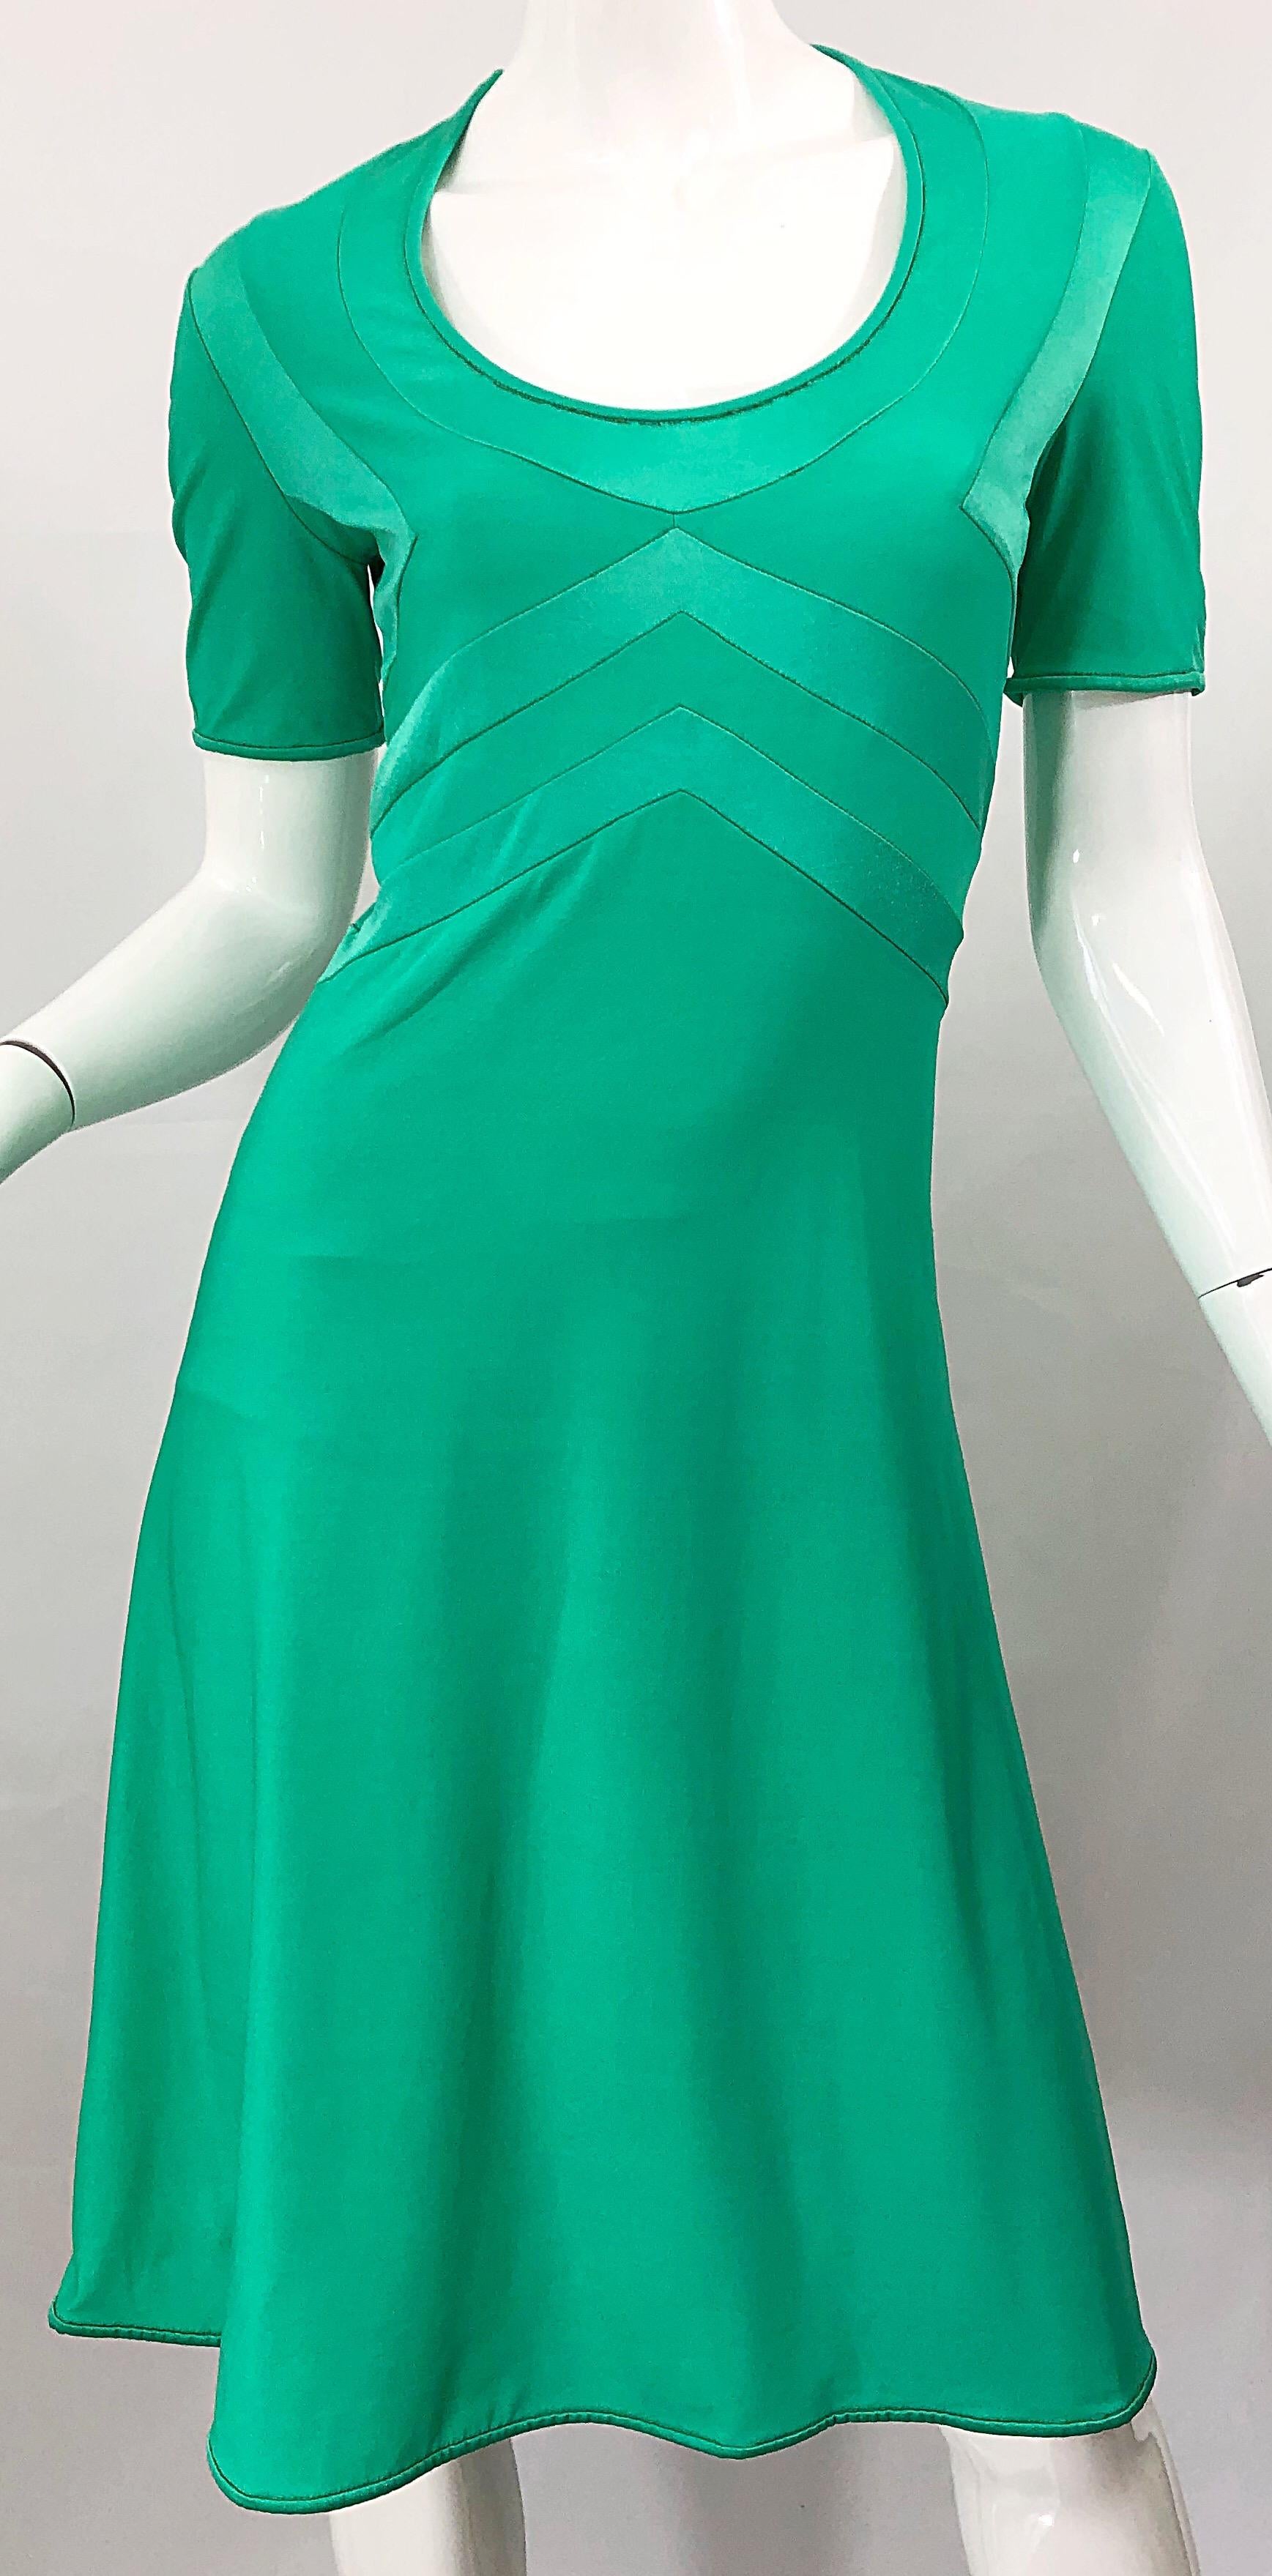 1970s Giorgio di Sant Angelo Kelly Green Slinky Bodysuit 70s Vintage Dress For Sale 3